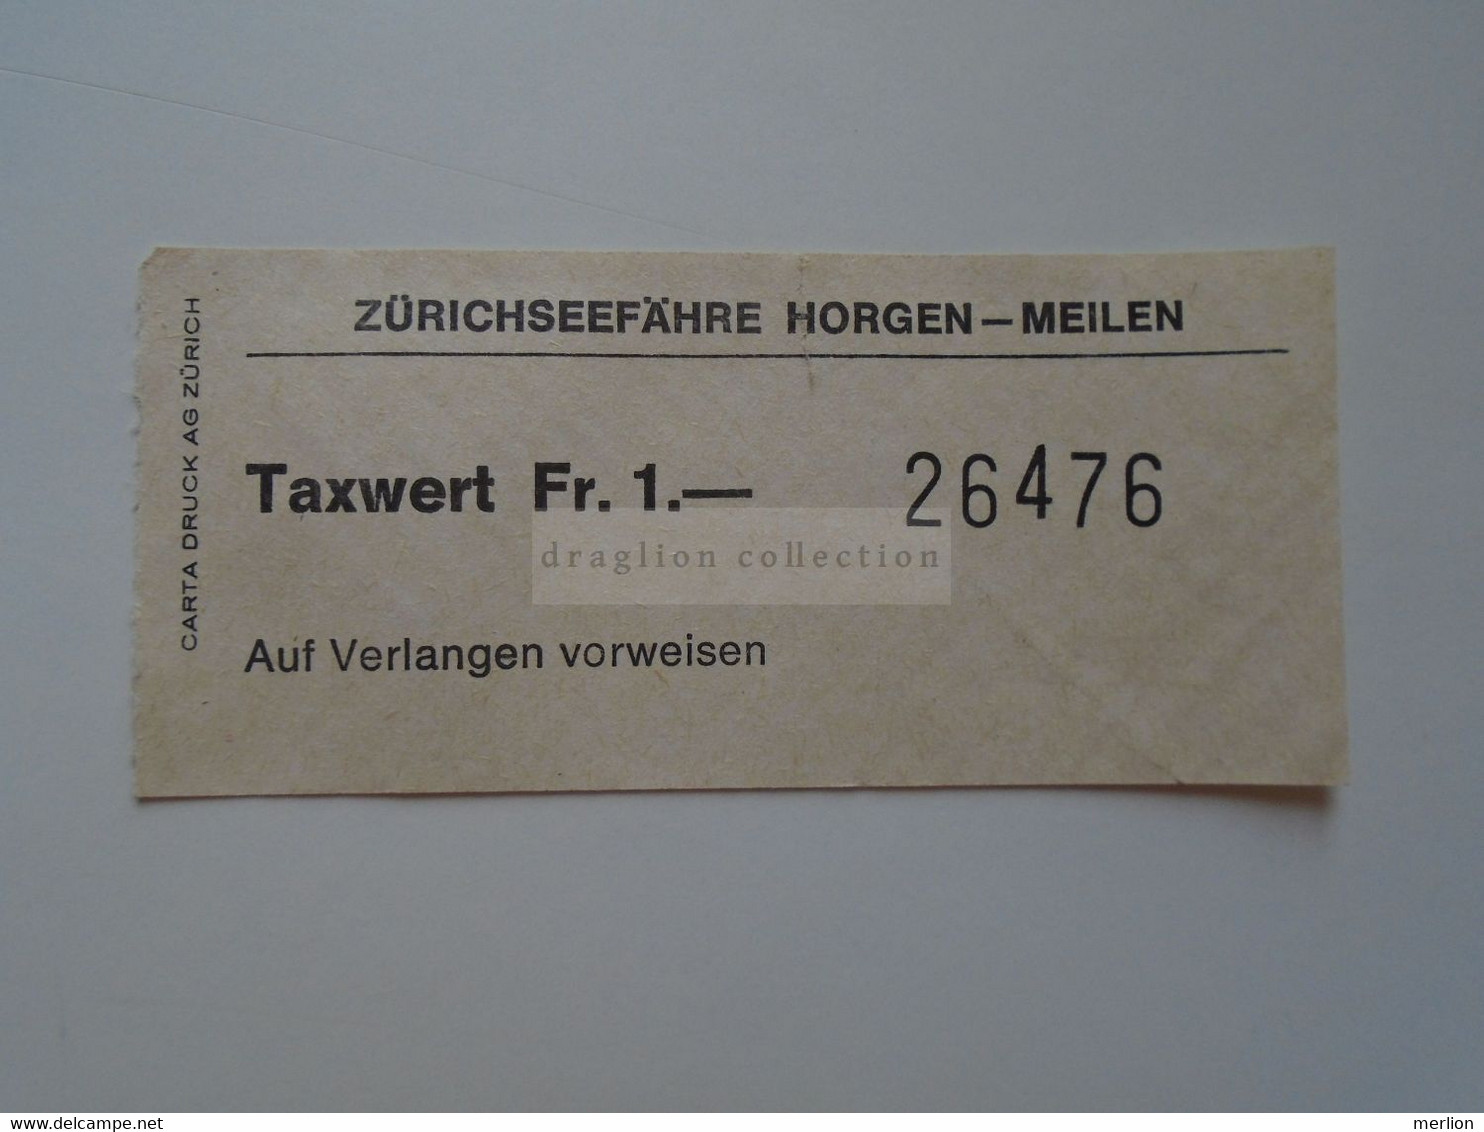 DT009  Switzerland  Schweiz - Zürichseefähre Horgen - Meilen - Fahrkarte Taxwert Fr. 1.-  Ticket  Ca 1960-80 - Europa